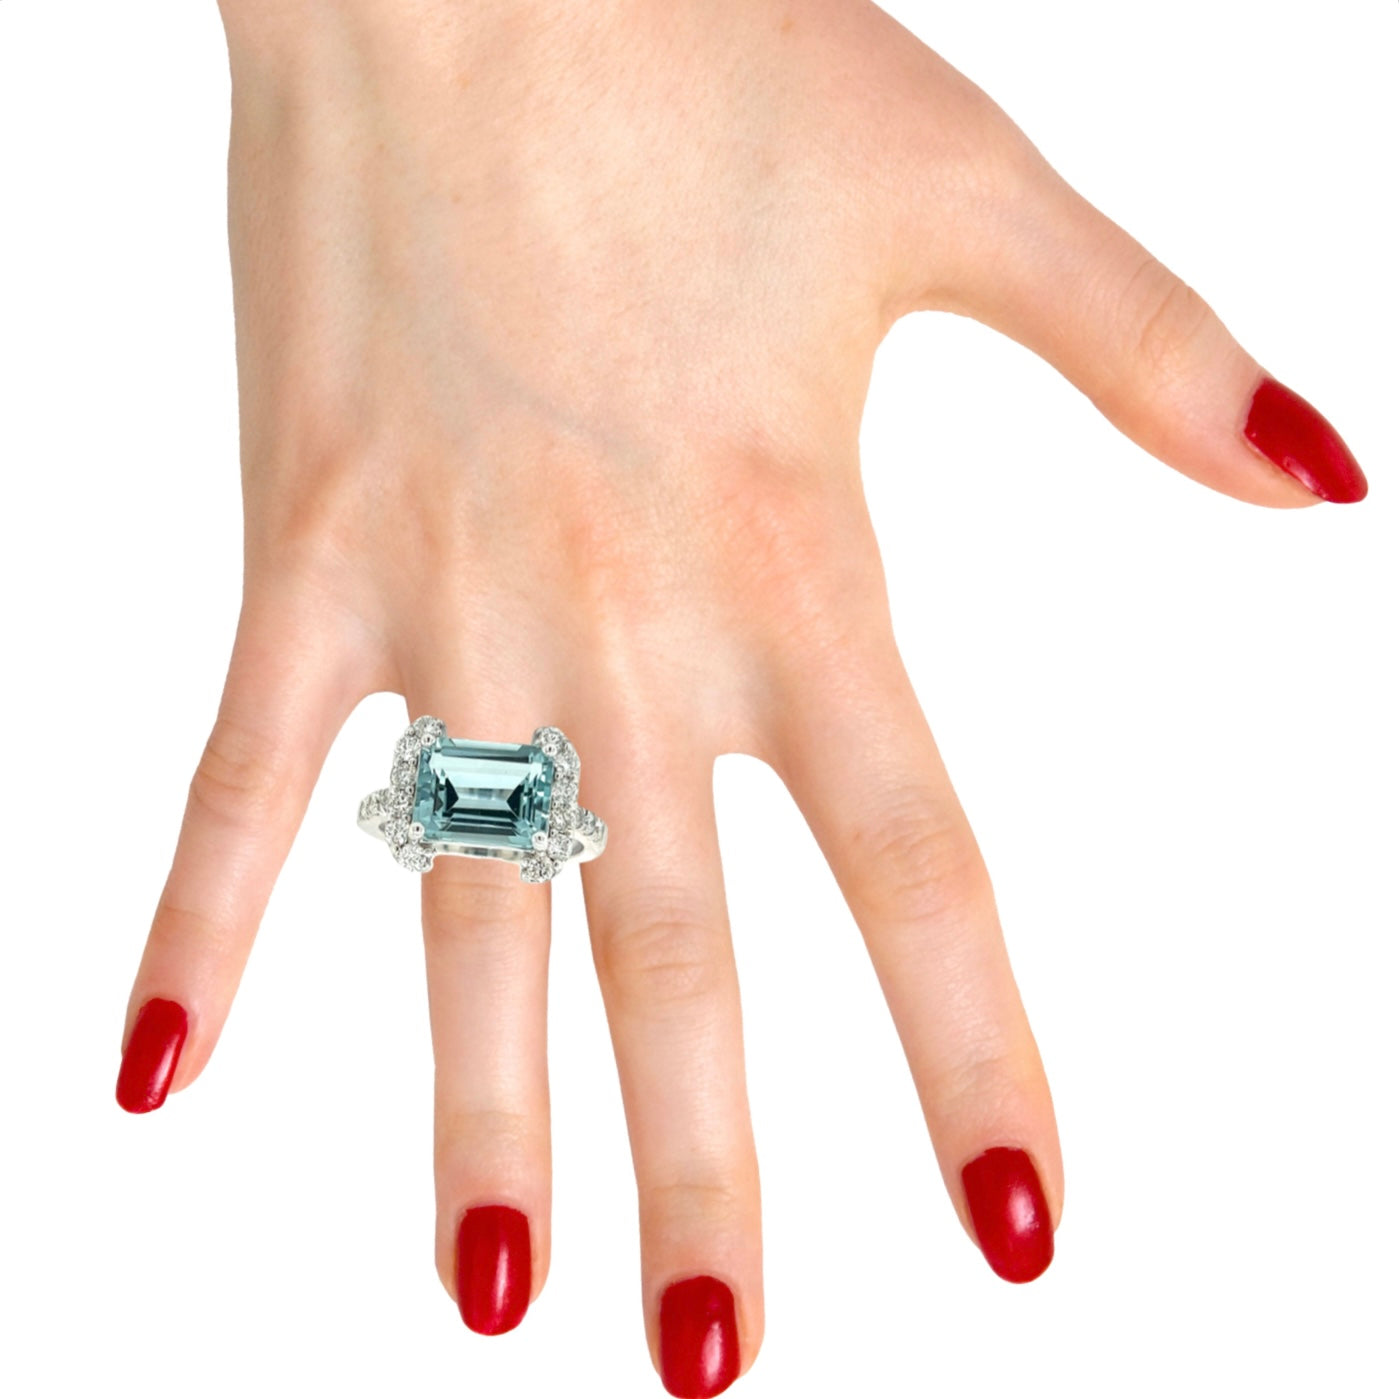 Natural Aquamarine Diamond Ring 6.5 14k white Gold 6.09 TCW Certified $4,690 217095